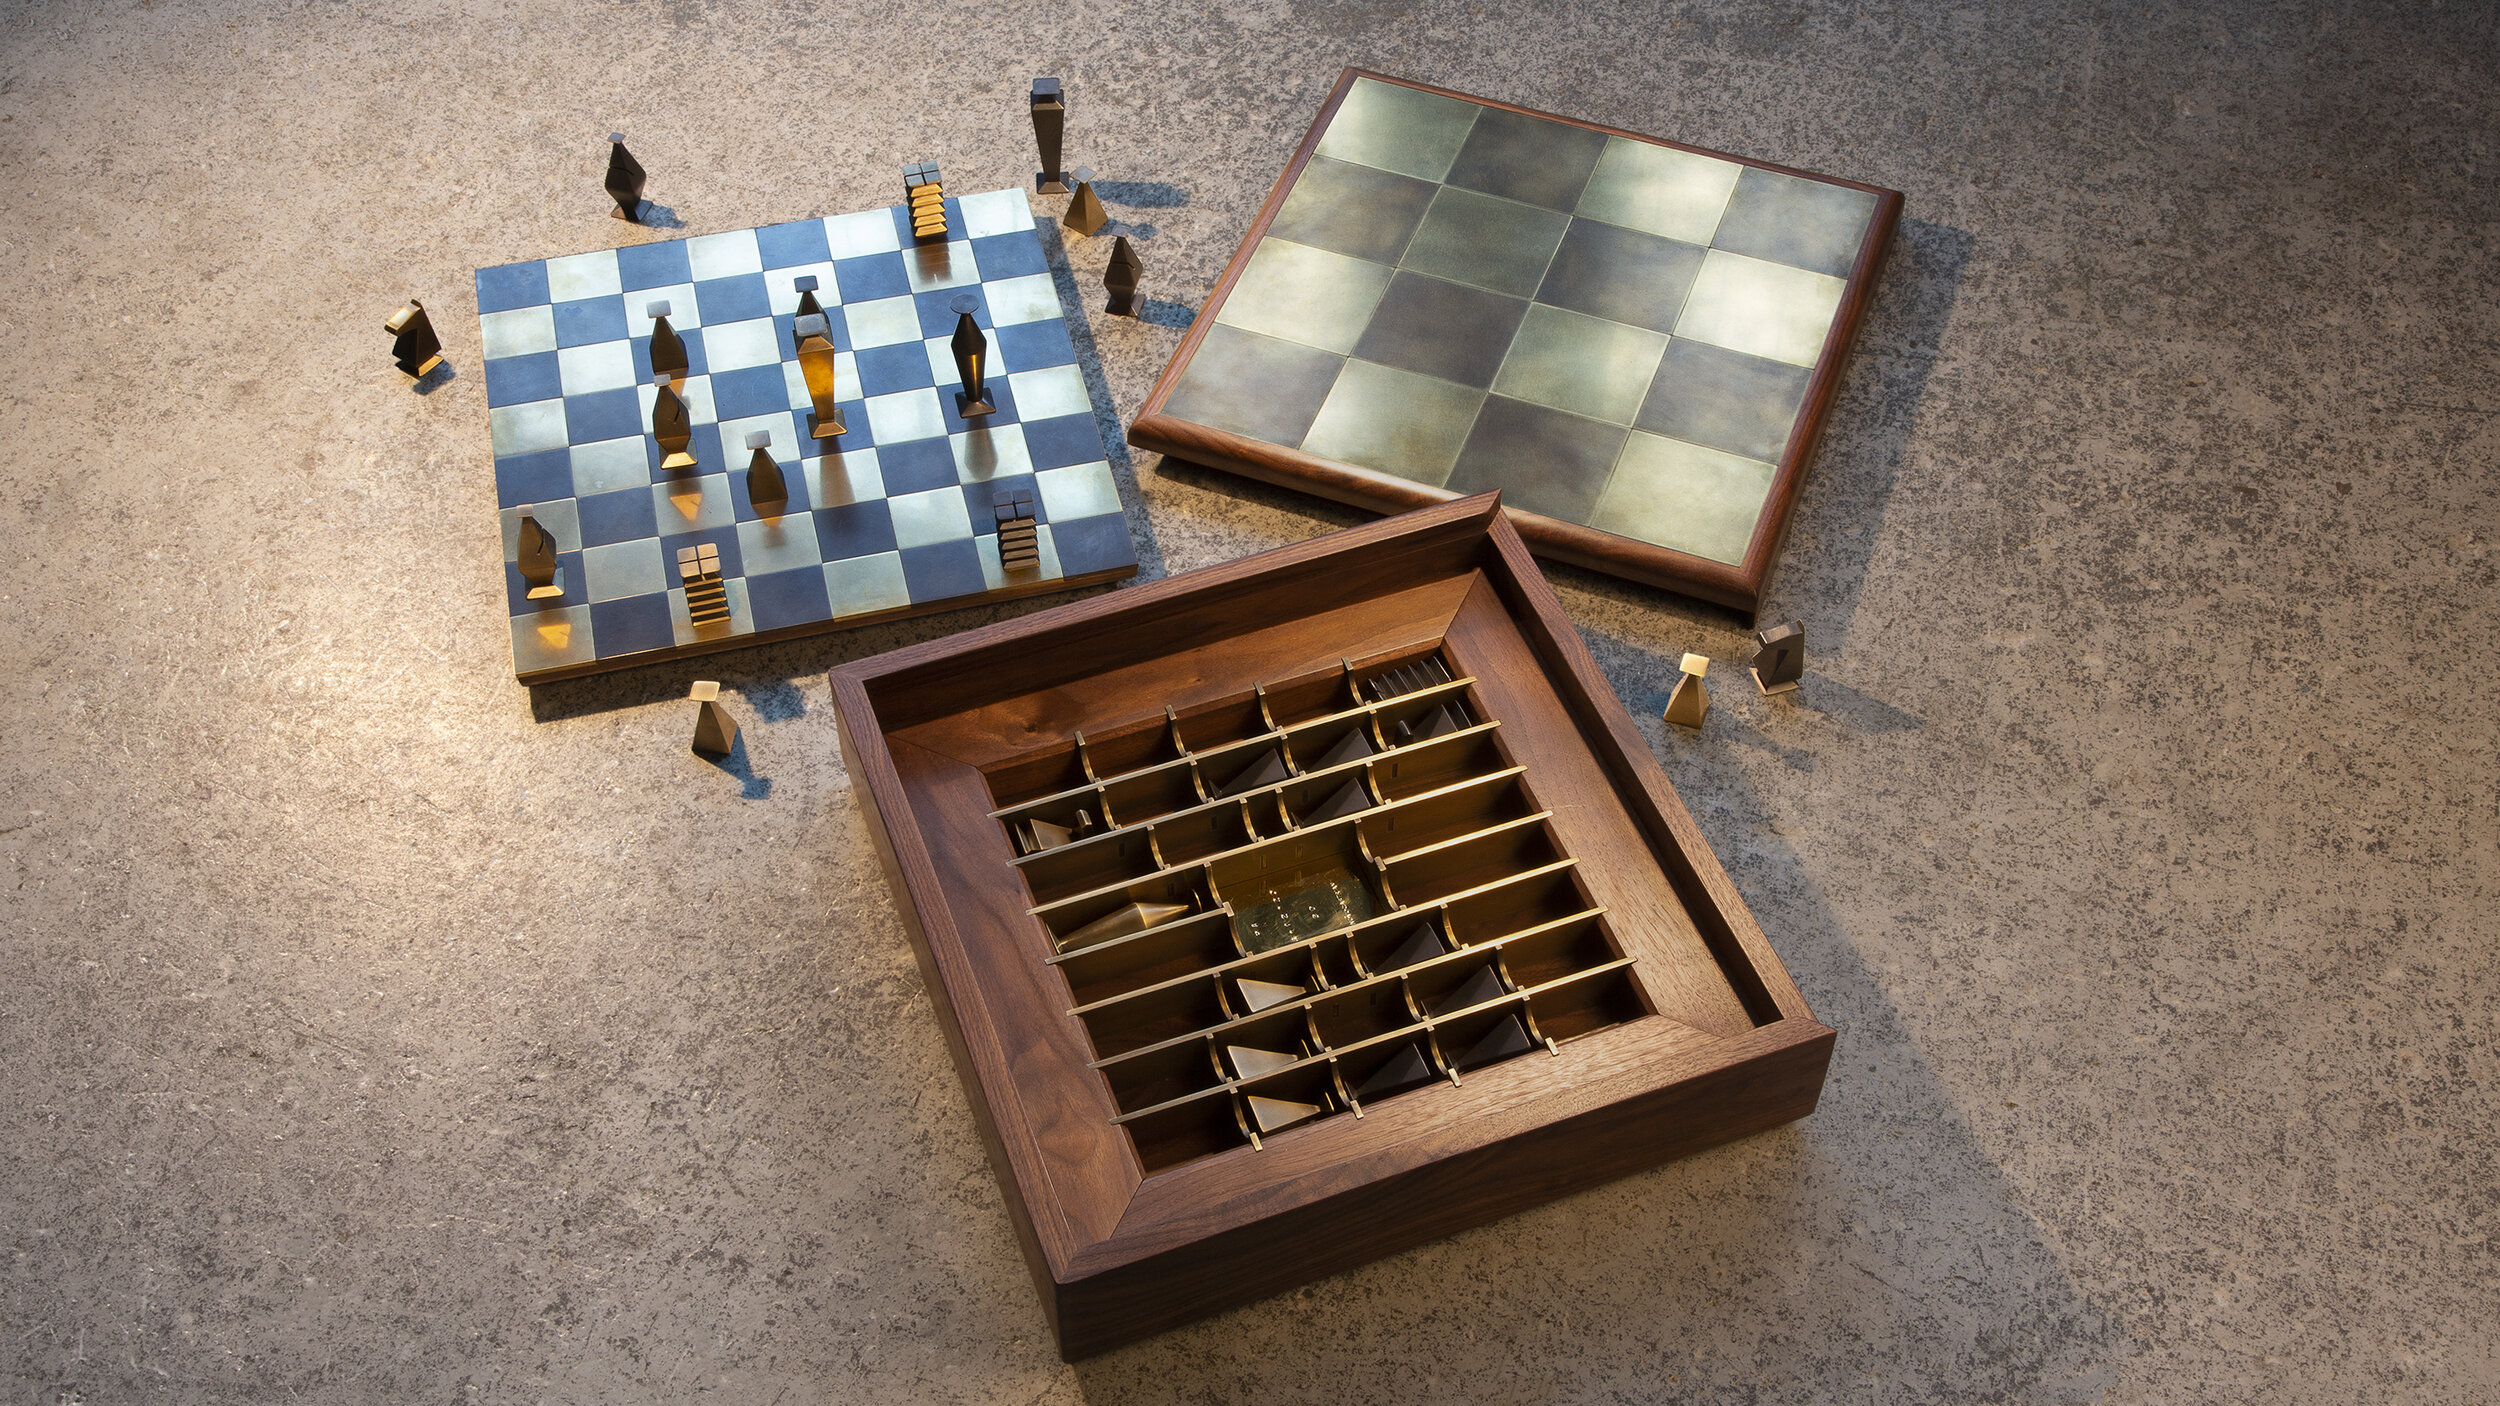 OTTERBURN_Chess Set_30_WEB.jpg